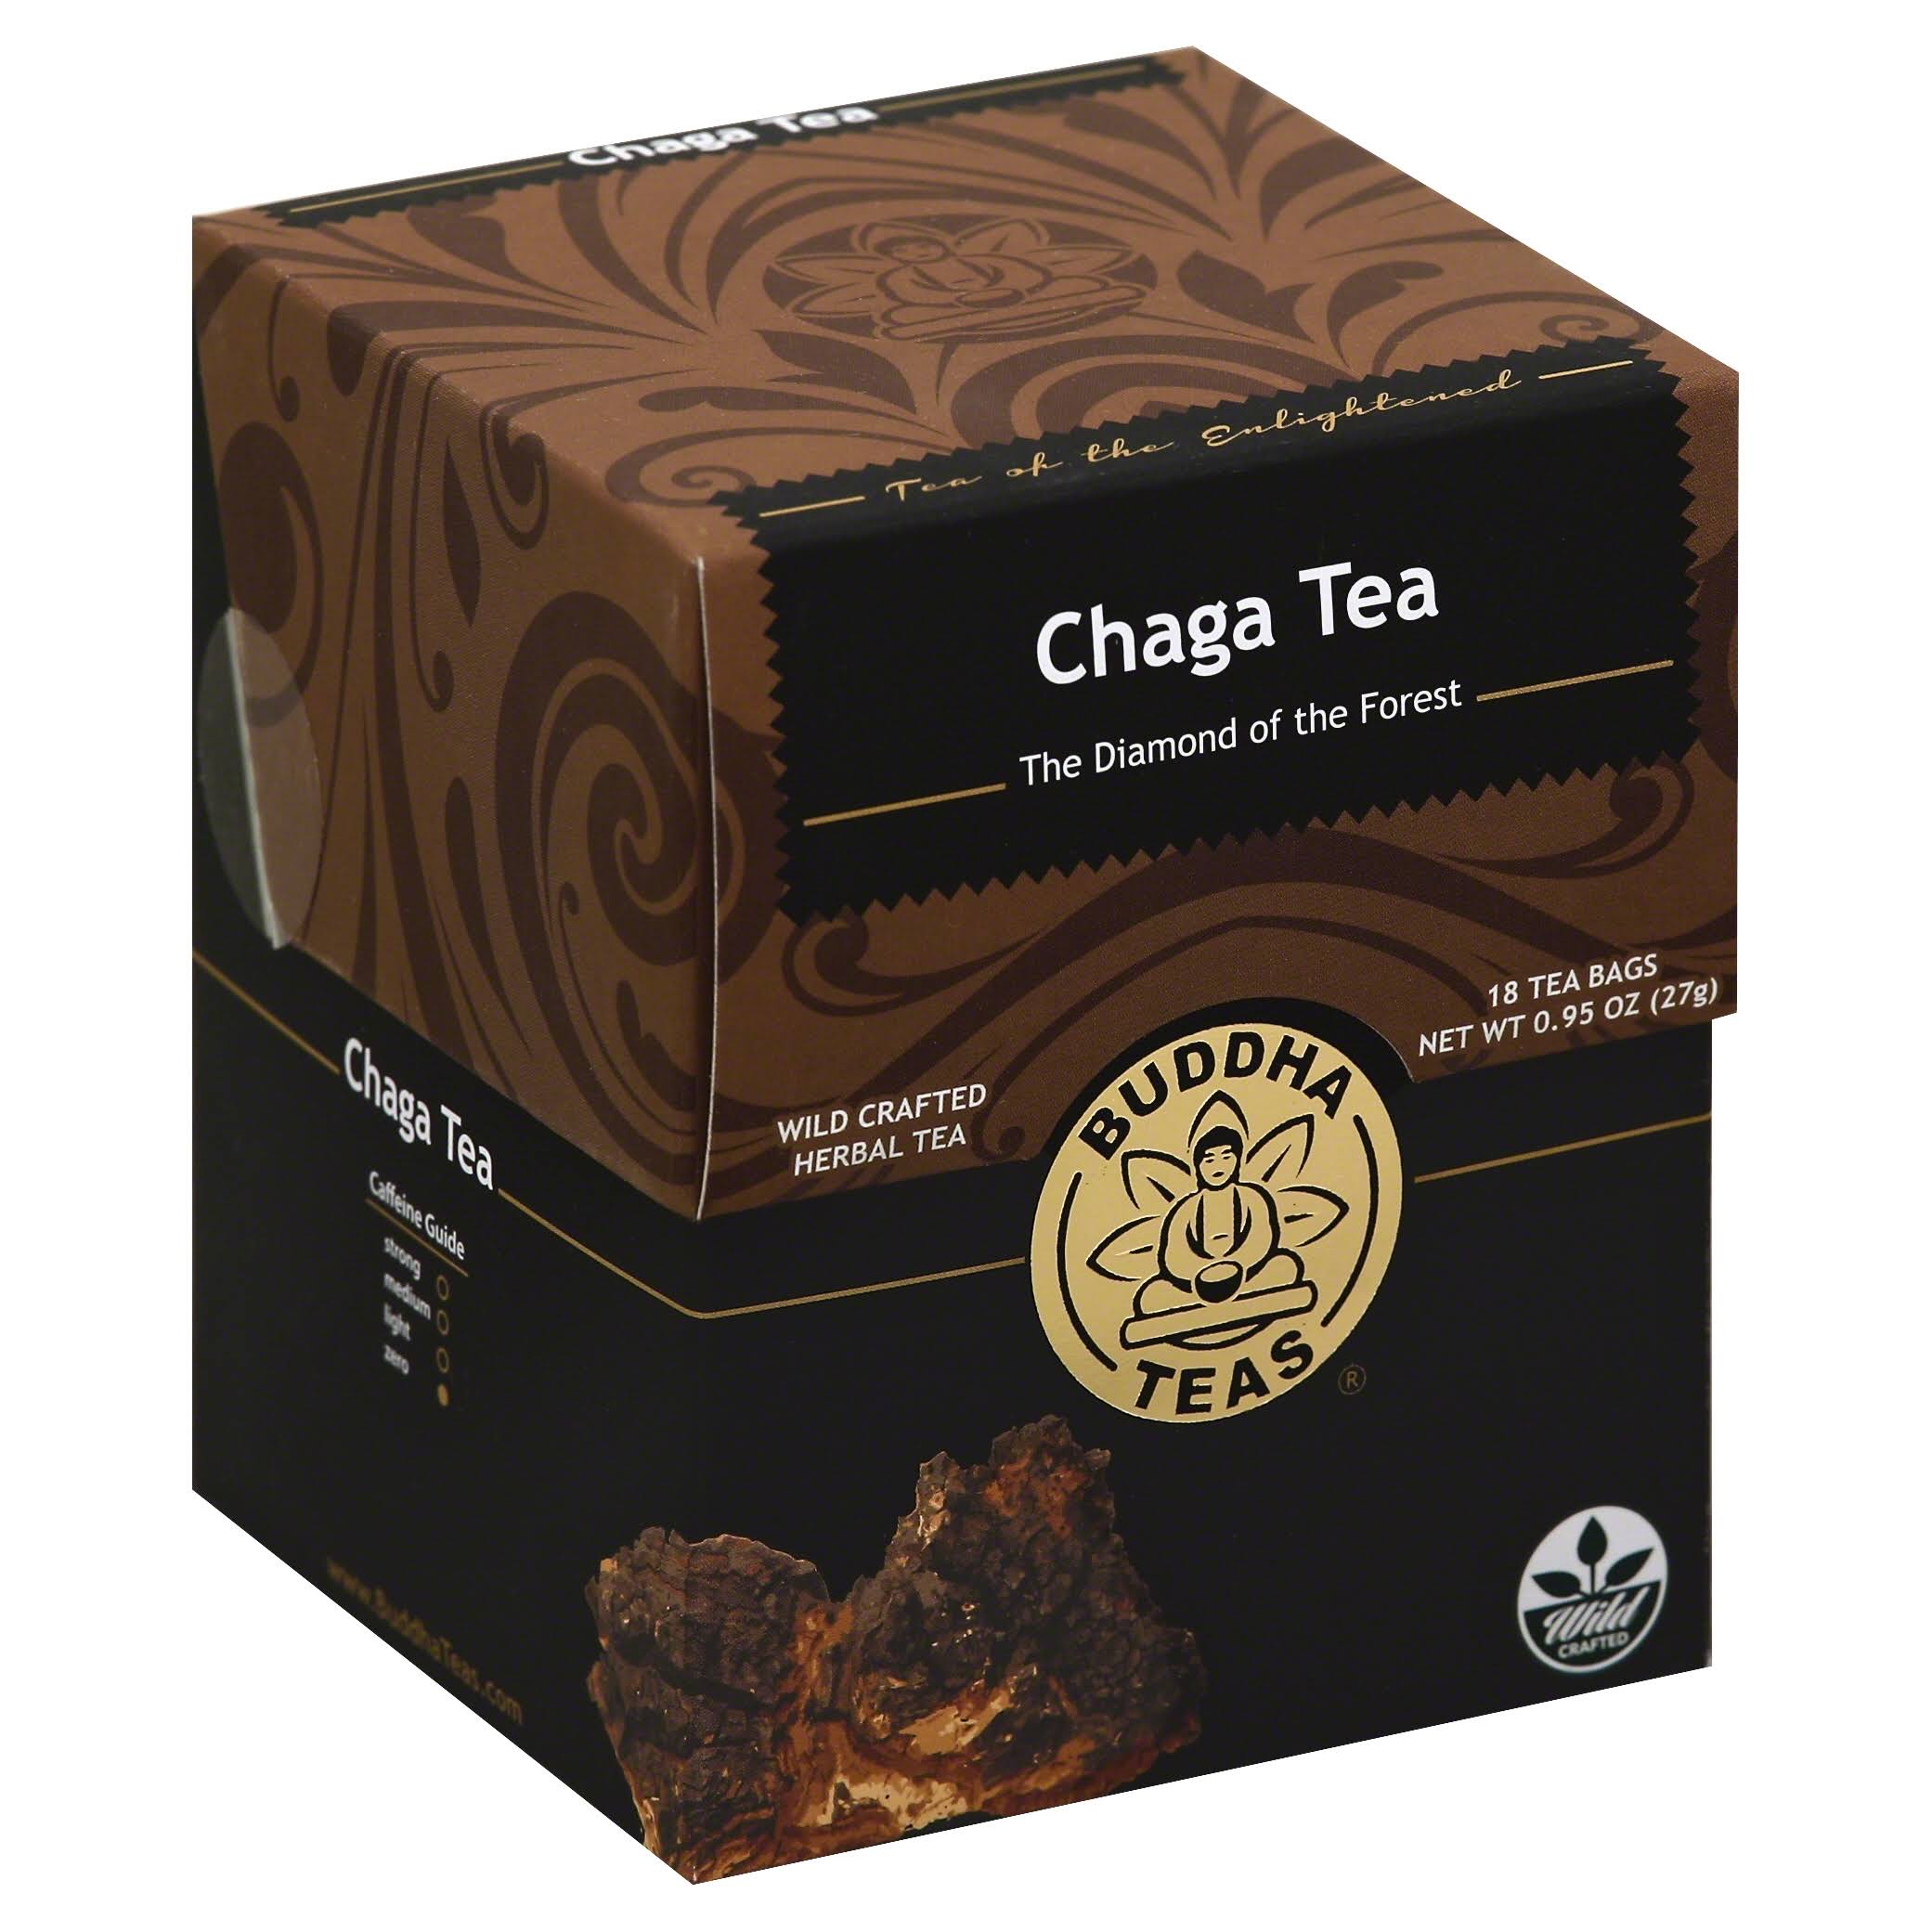 Buddha Teas Chaga Tea - 18 Count